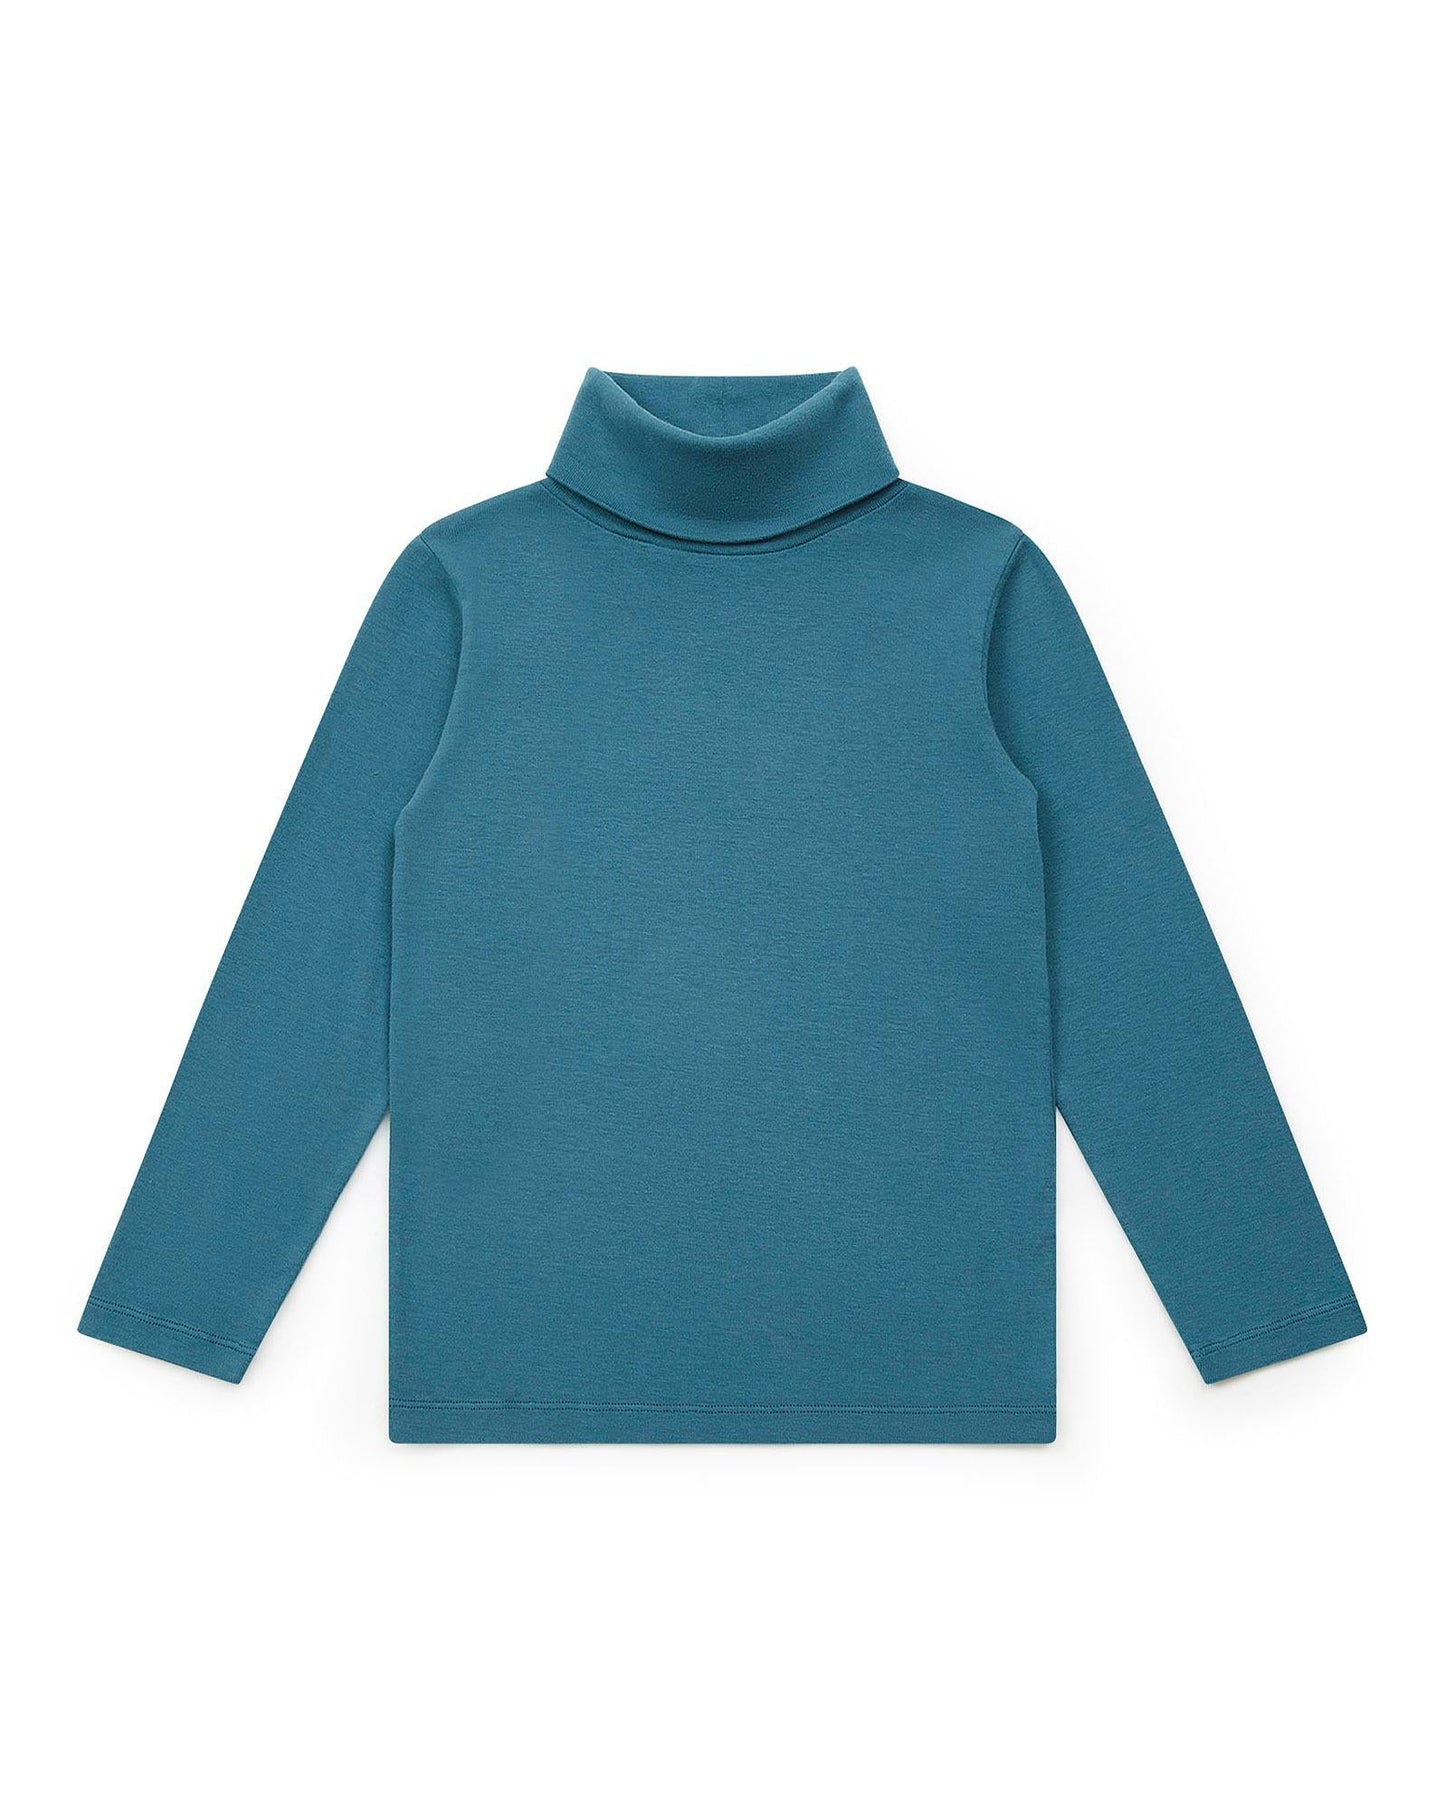 Below-Sweater - Titou Blue In GOTS certified organic cotton